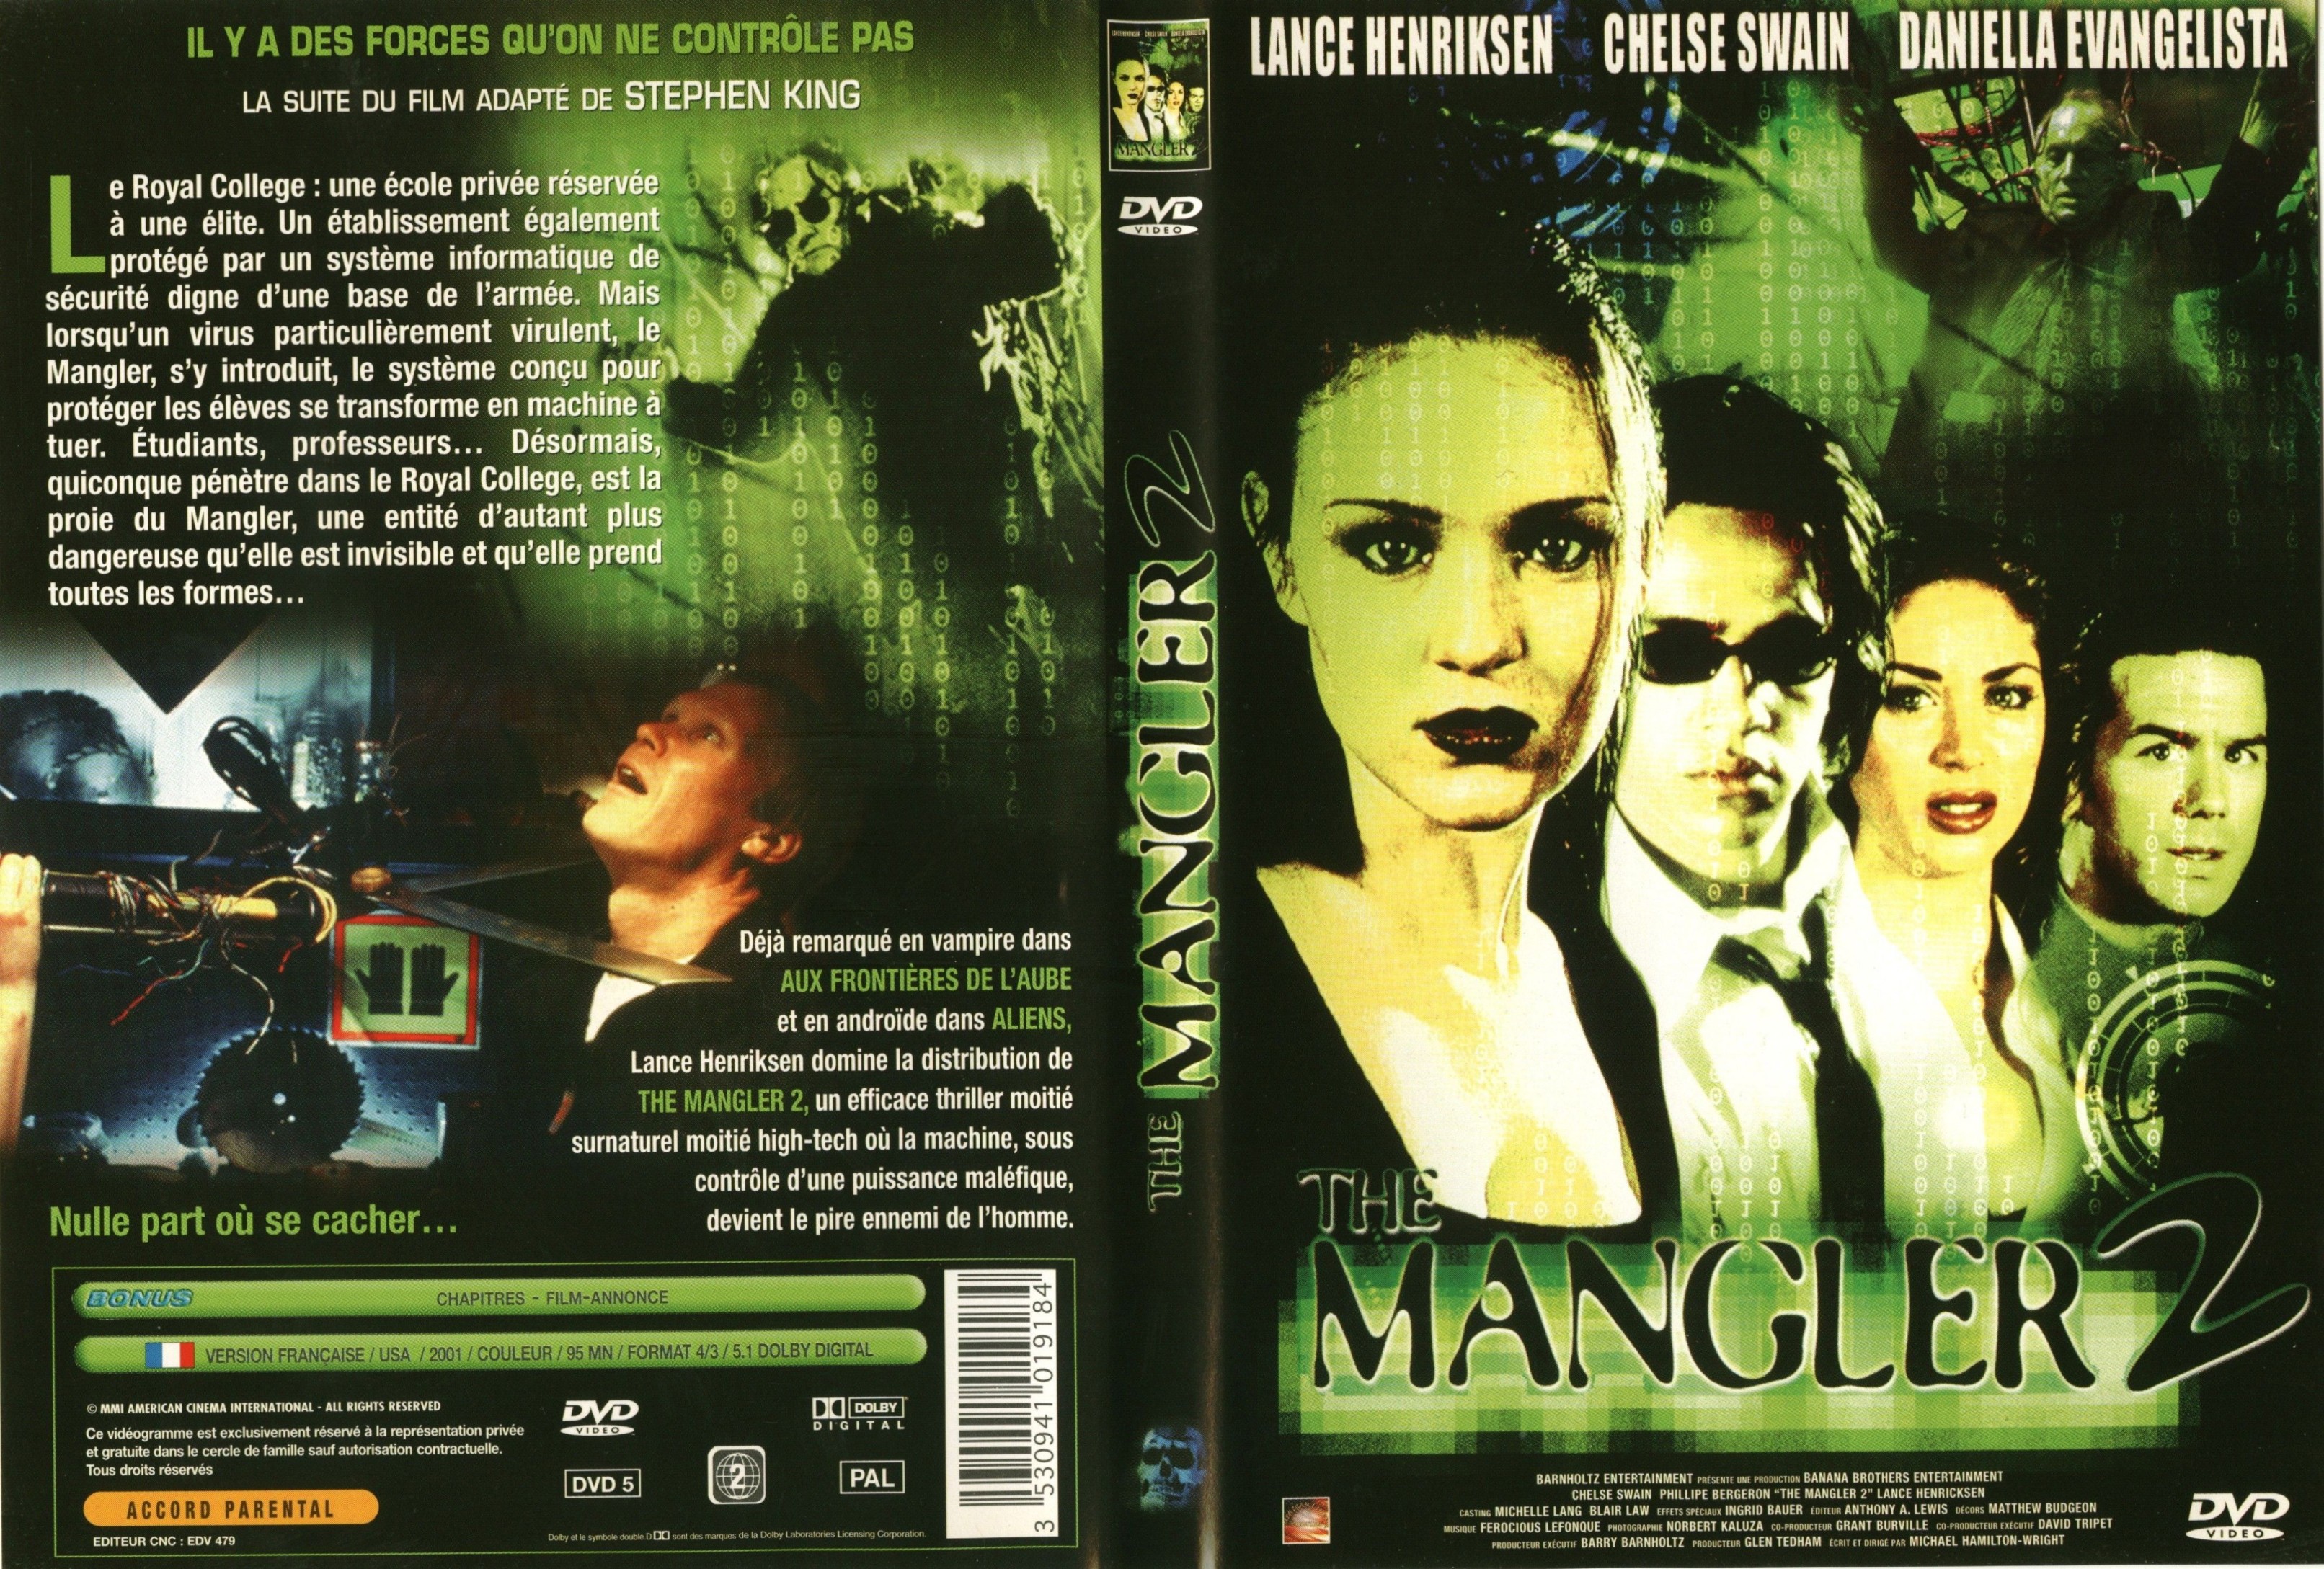 Jaquette DVD The Mangler 2